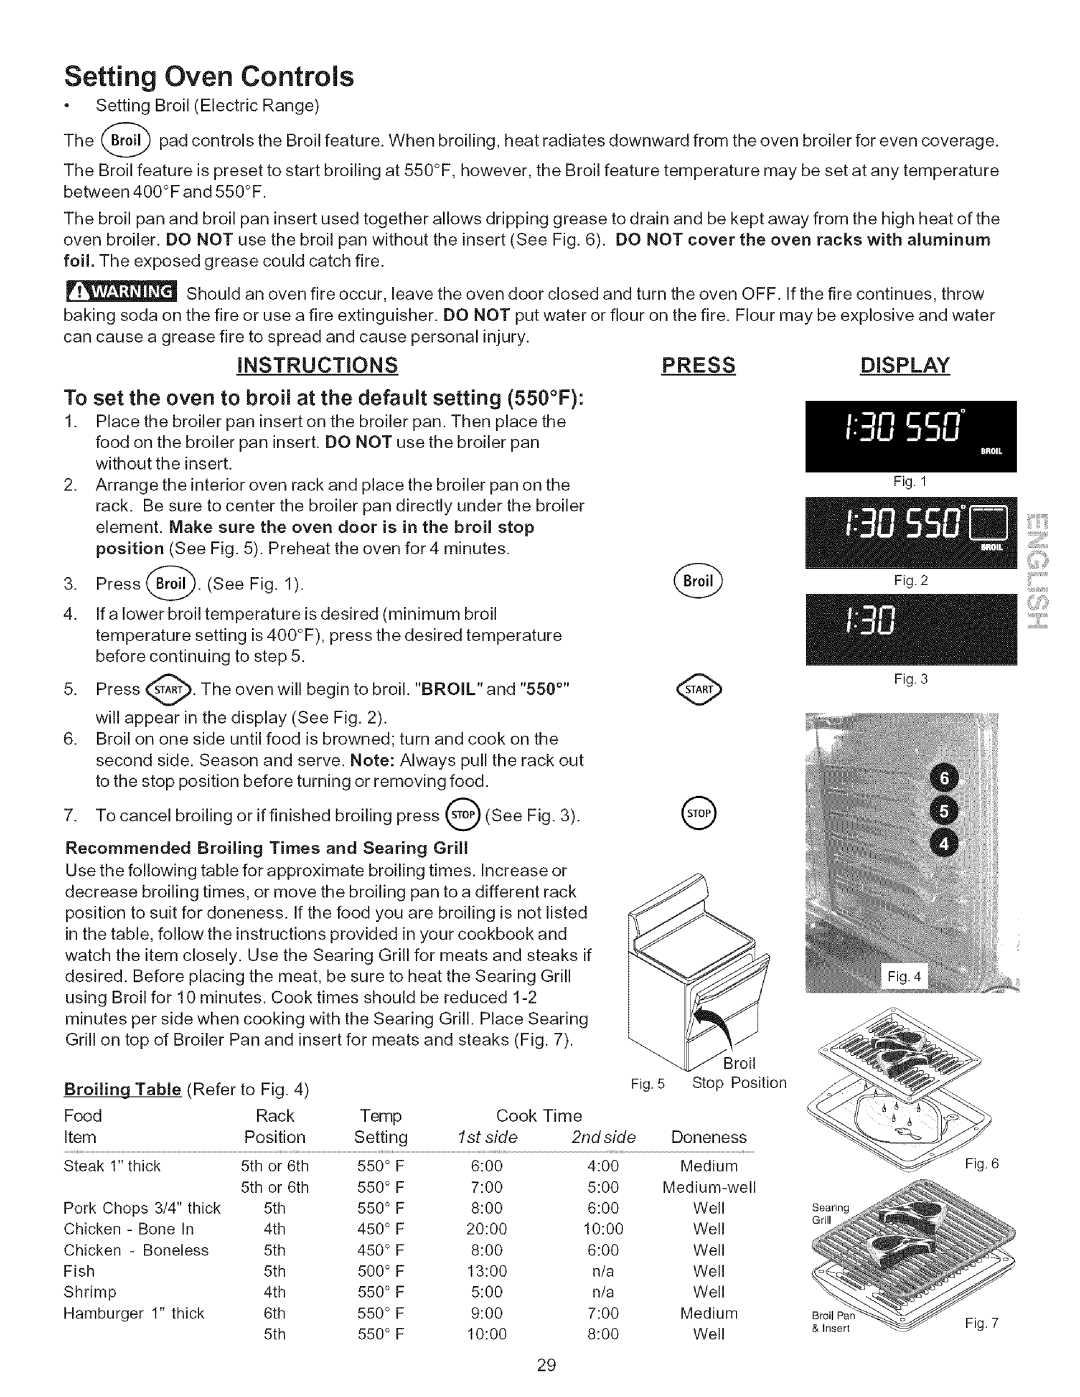 Kenmore 790-.9663, 9664 manual Setting Oven Controls, Instructionspress, Display, ii2Jill 